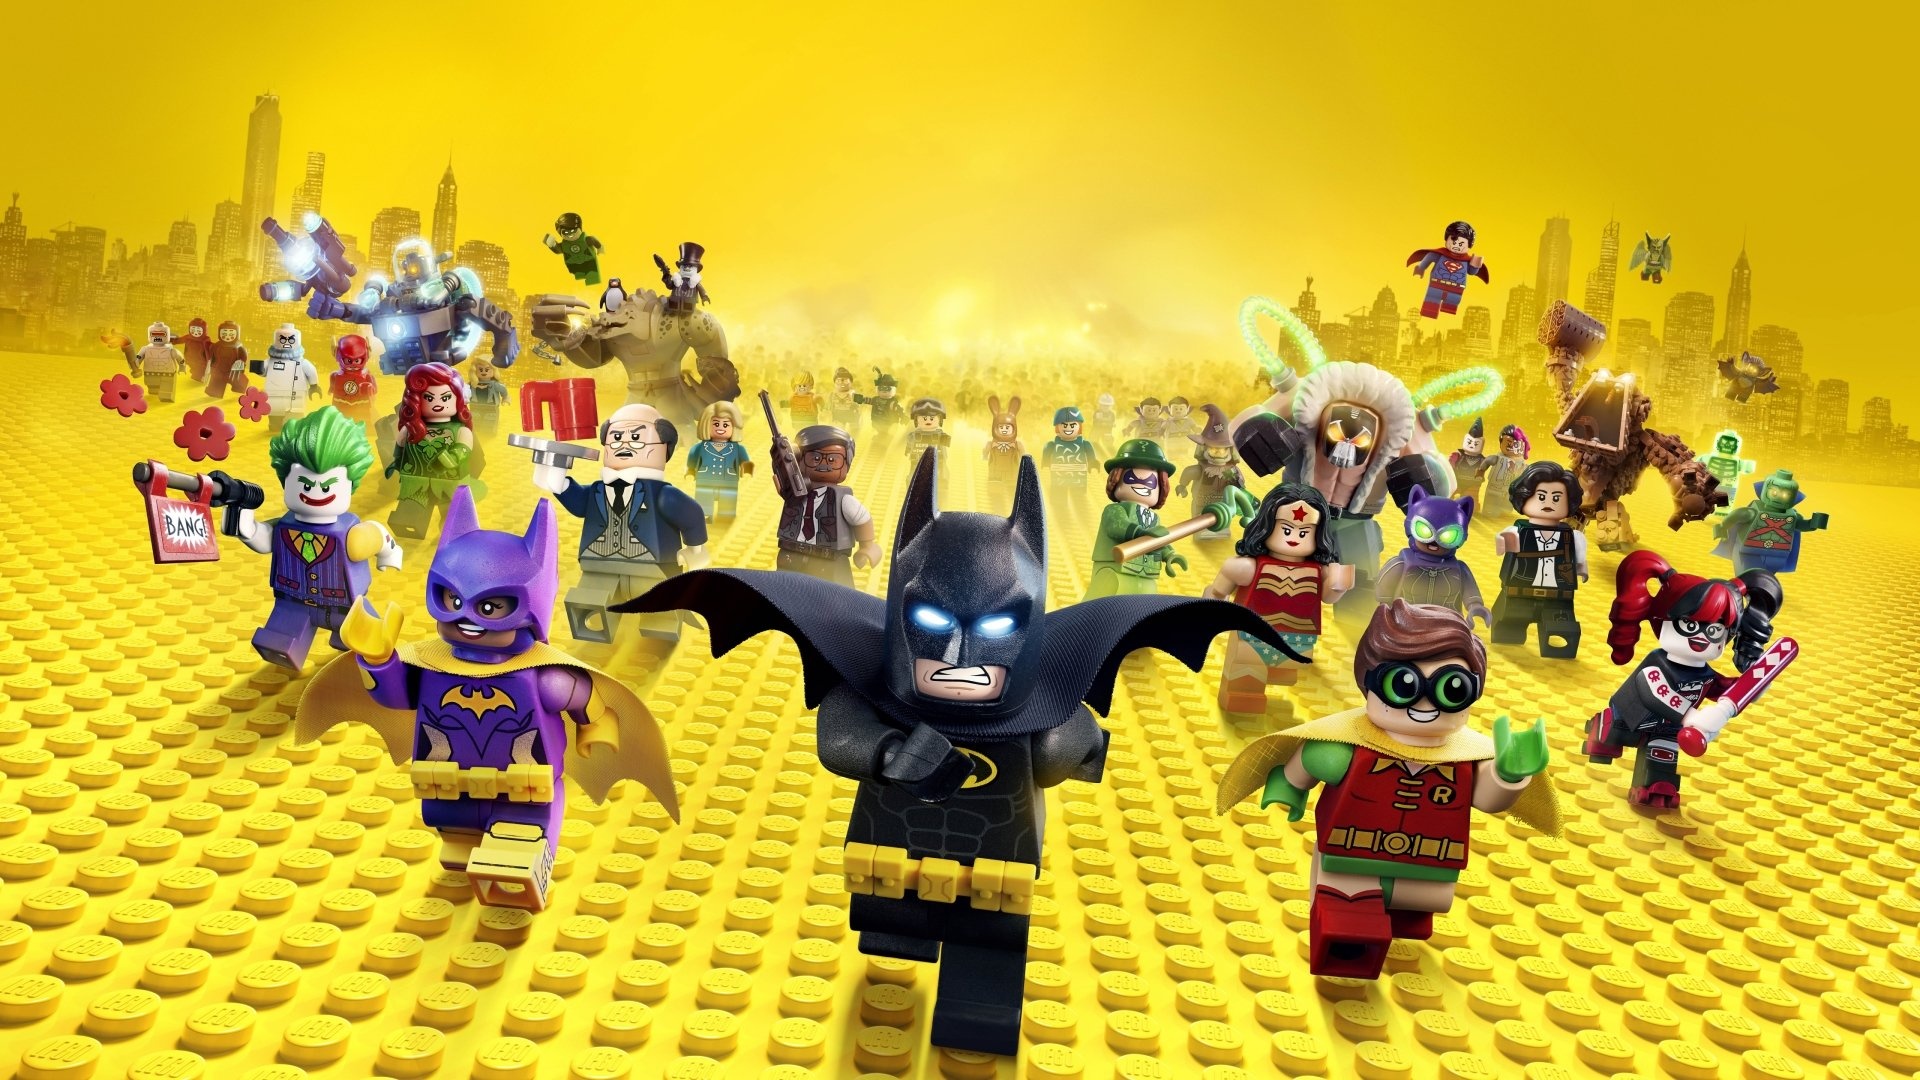 Lego Batman Movie, Asr 94 gallery, Exclusive images, Behind-the-scenes shots, 1920x1080 Full HD Desktop